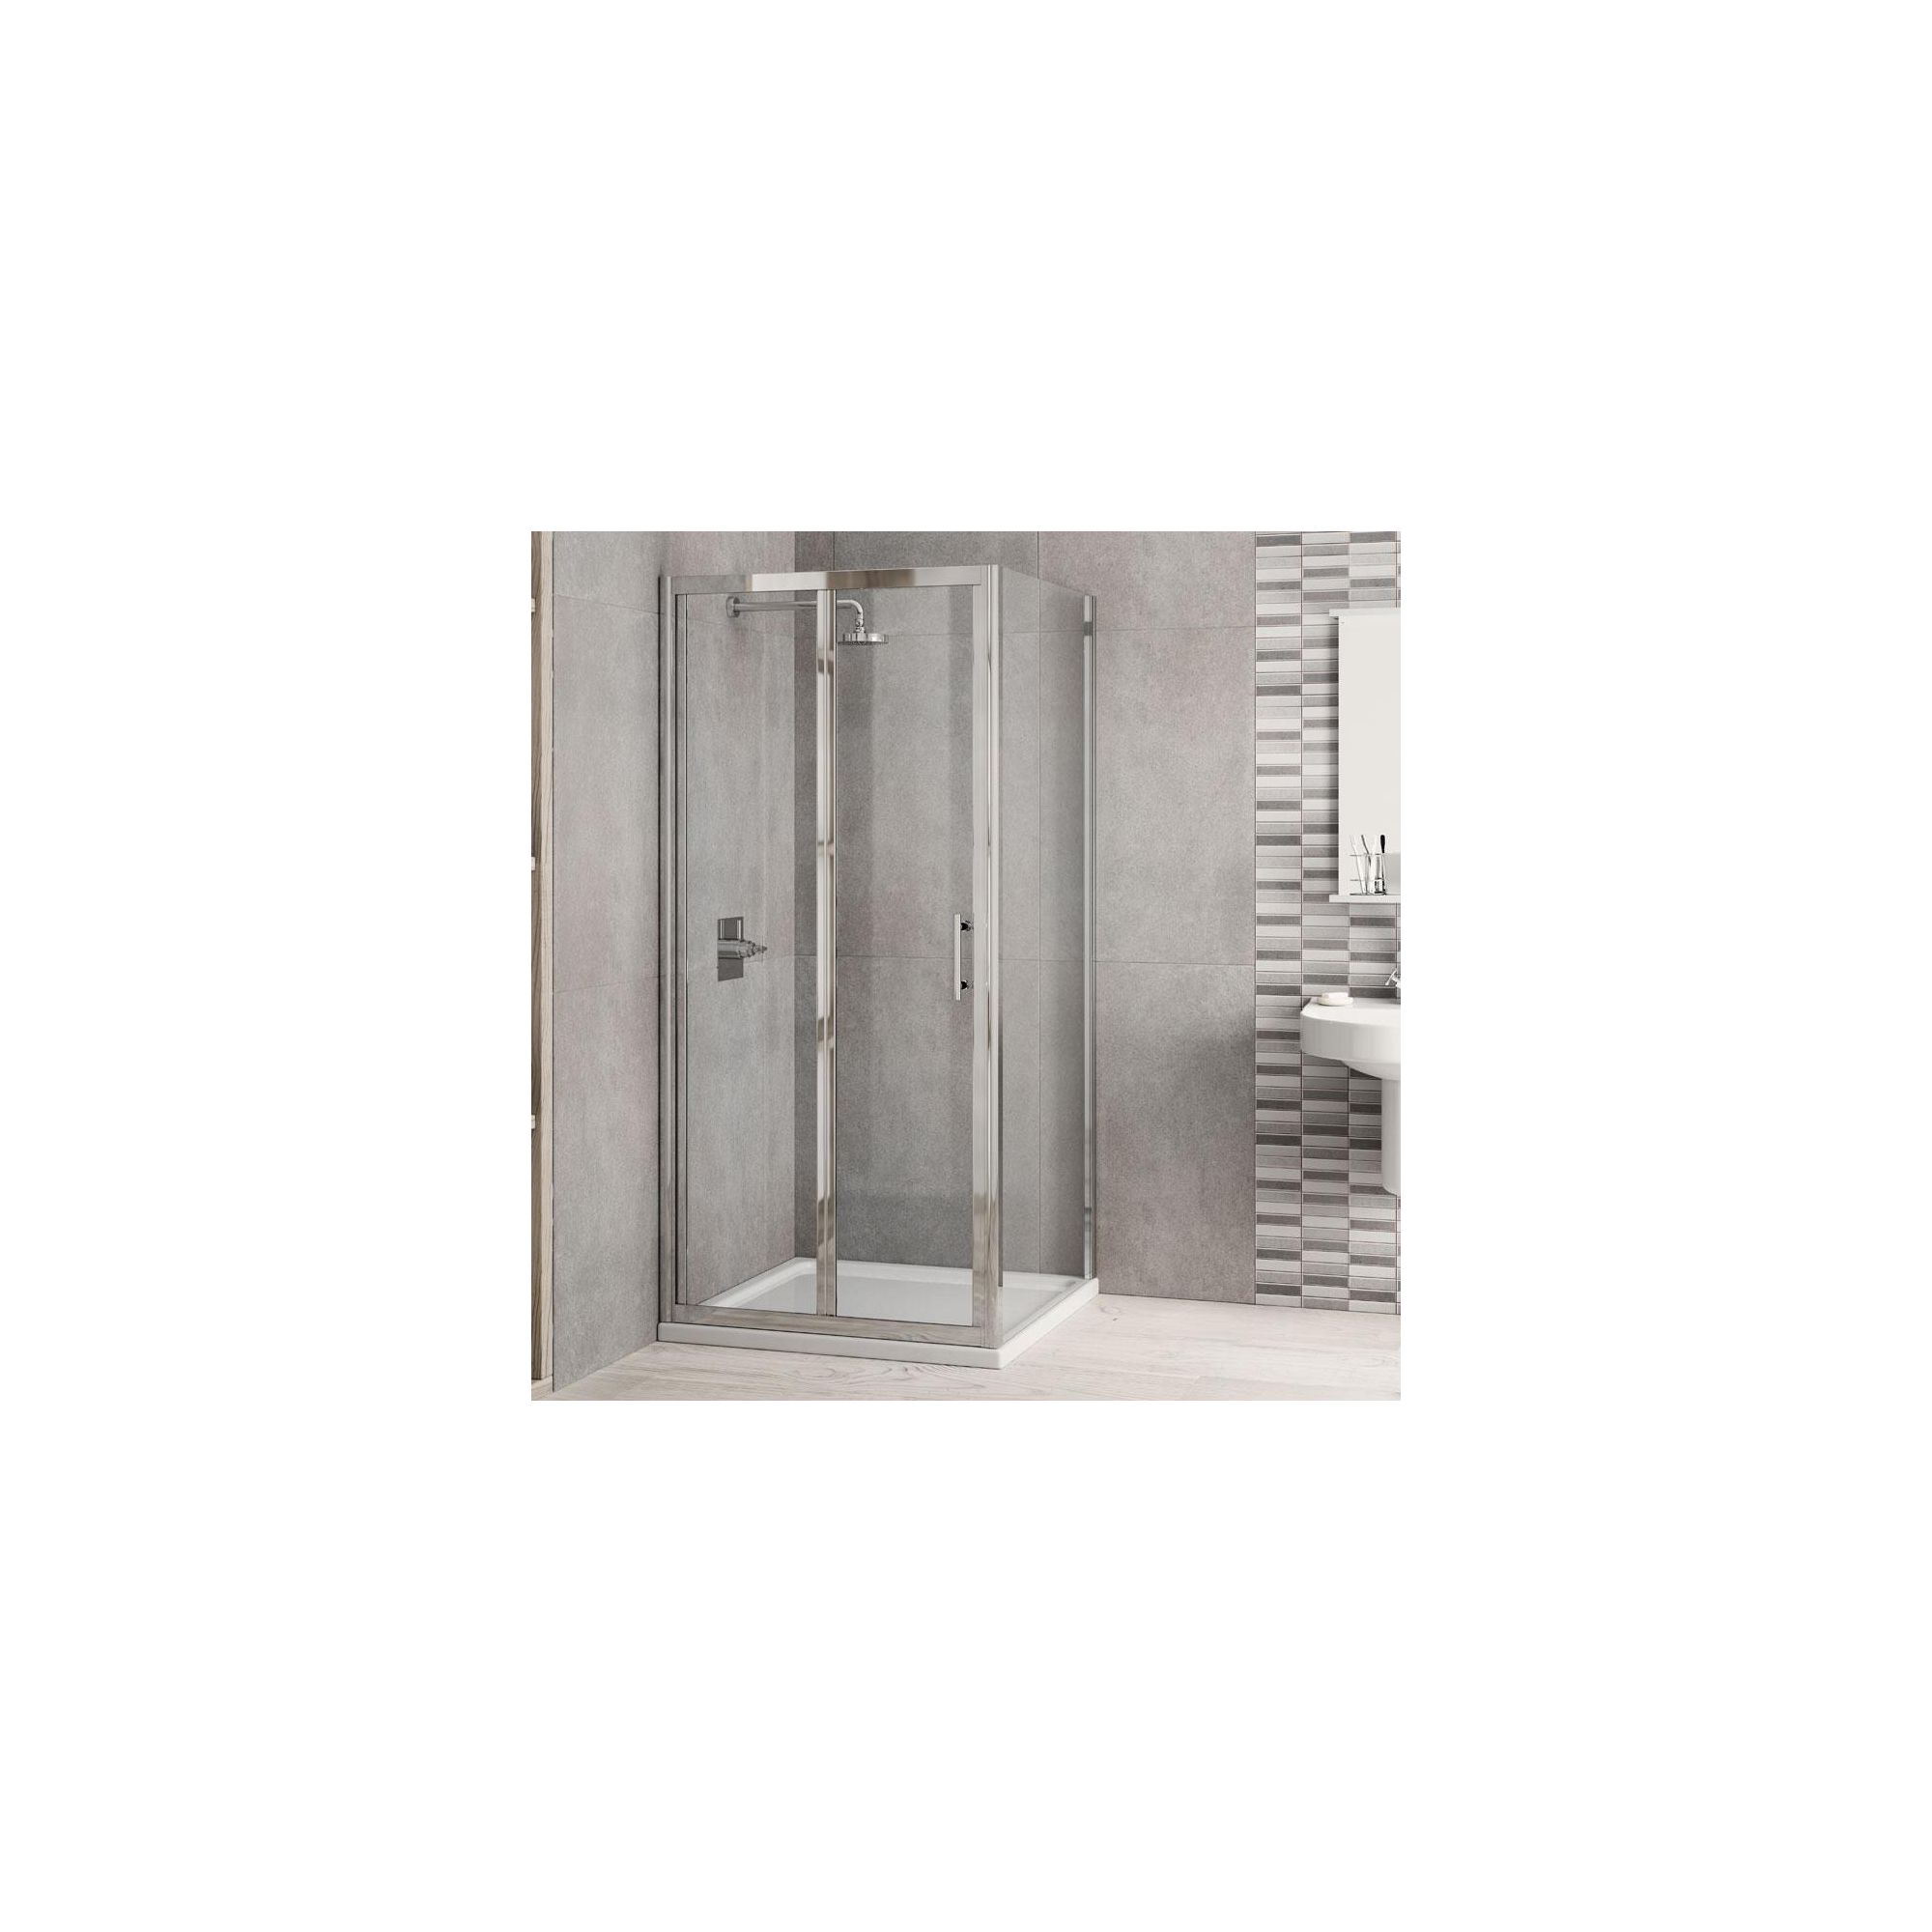 Elemis Inspire Bi-Fold Door Shower Enclosure, 760mm x 760mm, 6mm Glass, Low Profile Tray at Tescos Direct